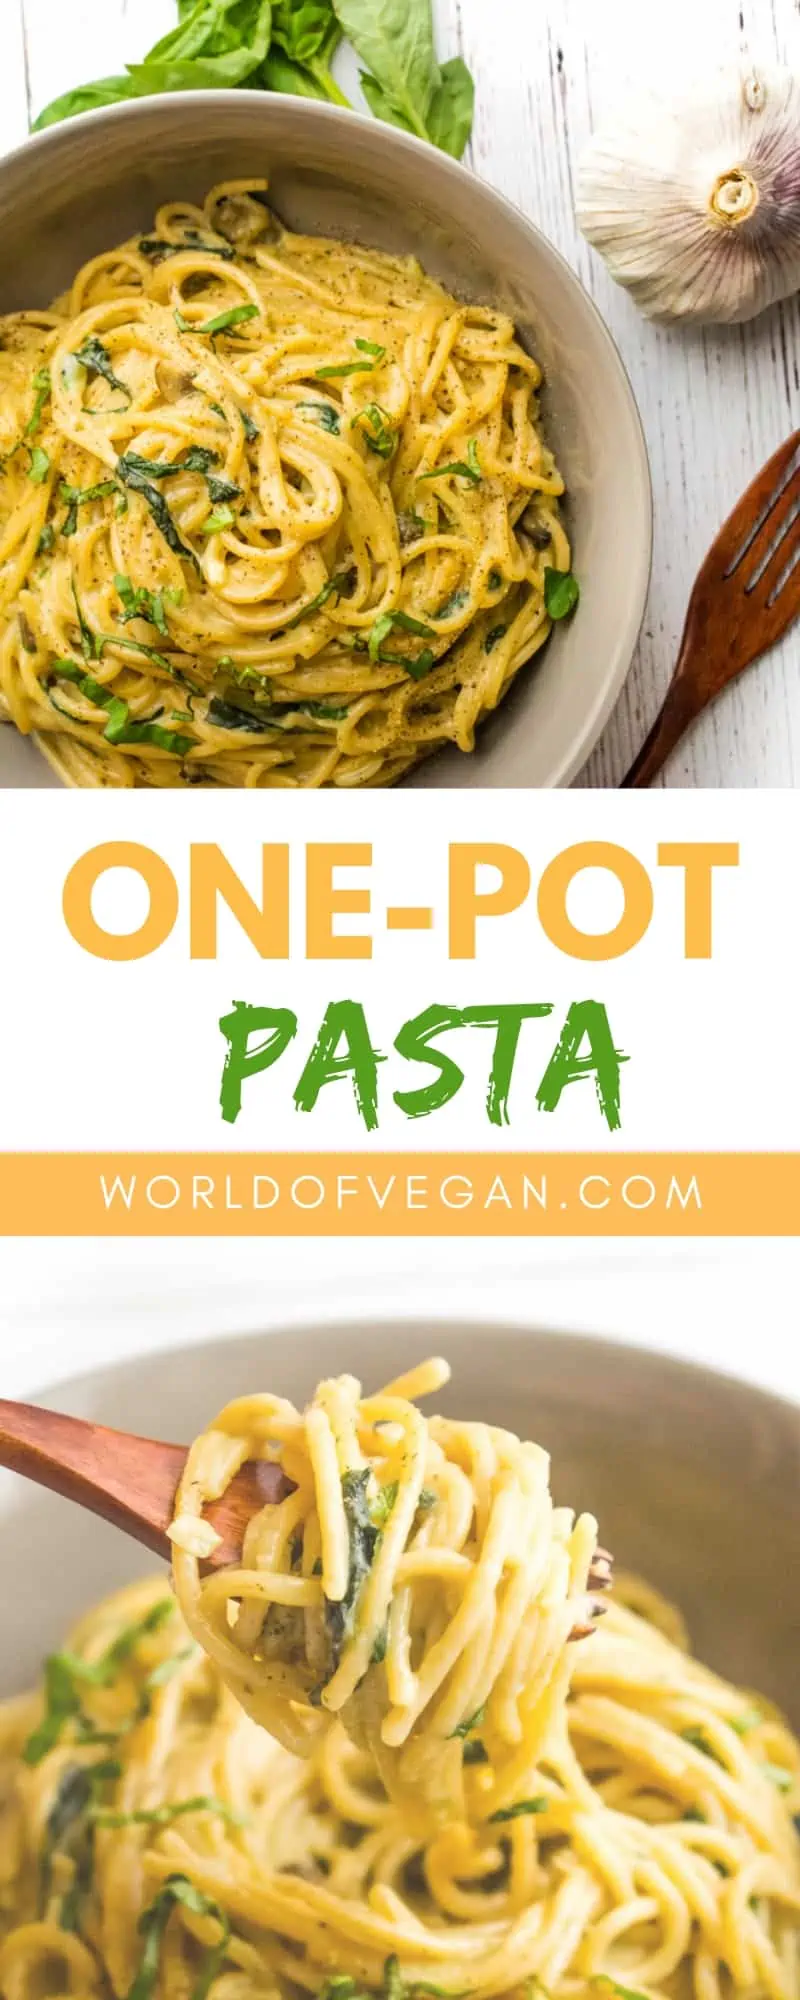 One Pot Pasta | WorldofVegan.com | #Vegan #vegetarian #dinner #pasta #recipe #plantbased #dairyfree